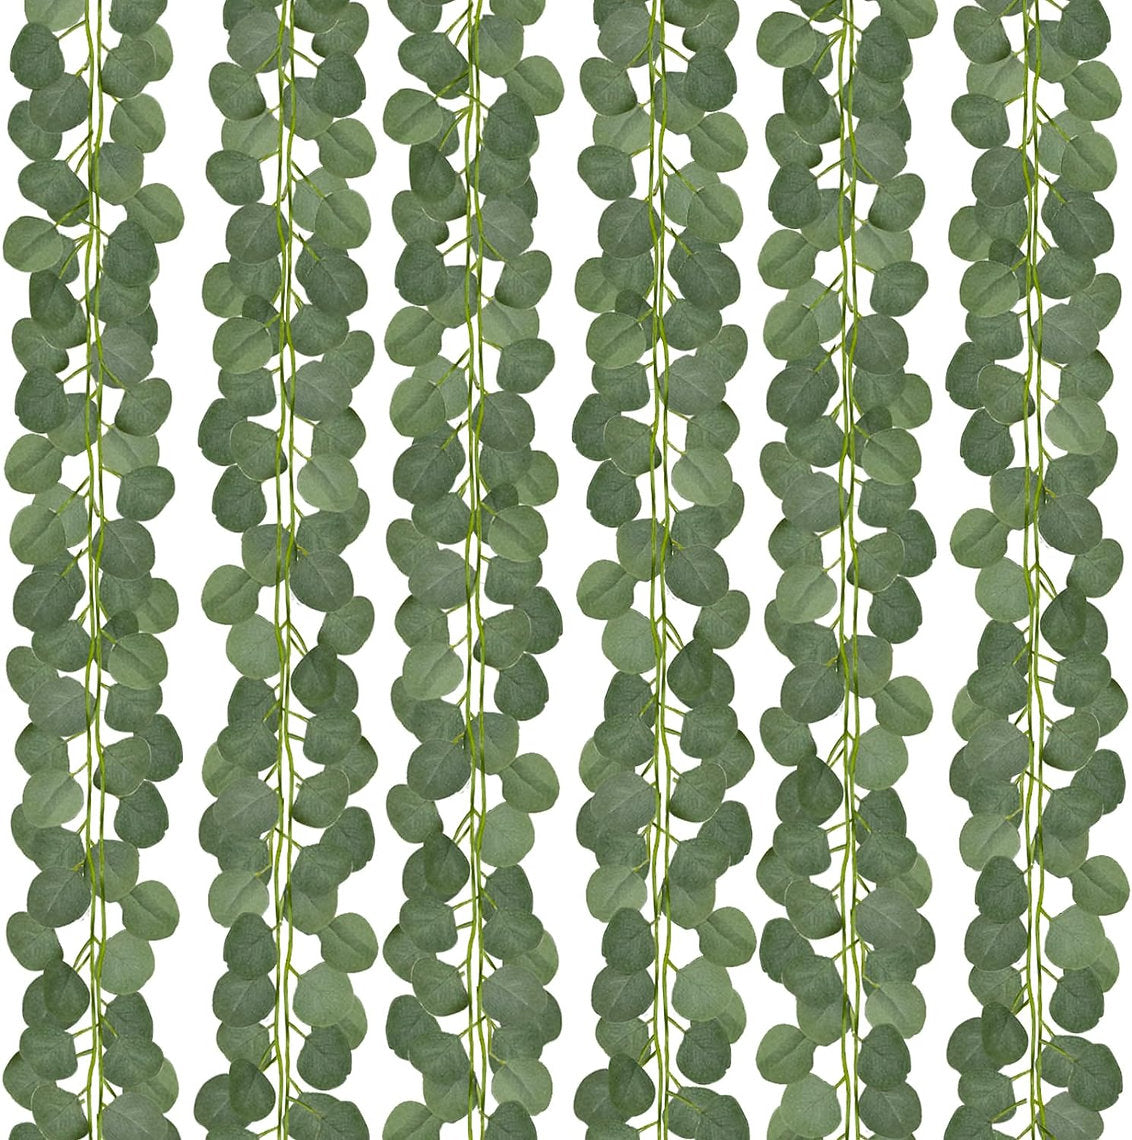 Eucalyptus-Inspired Decorations Garland (1.8M)